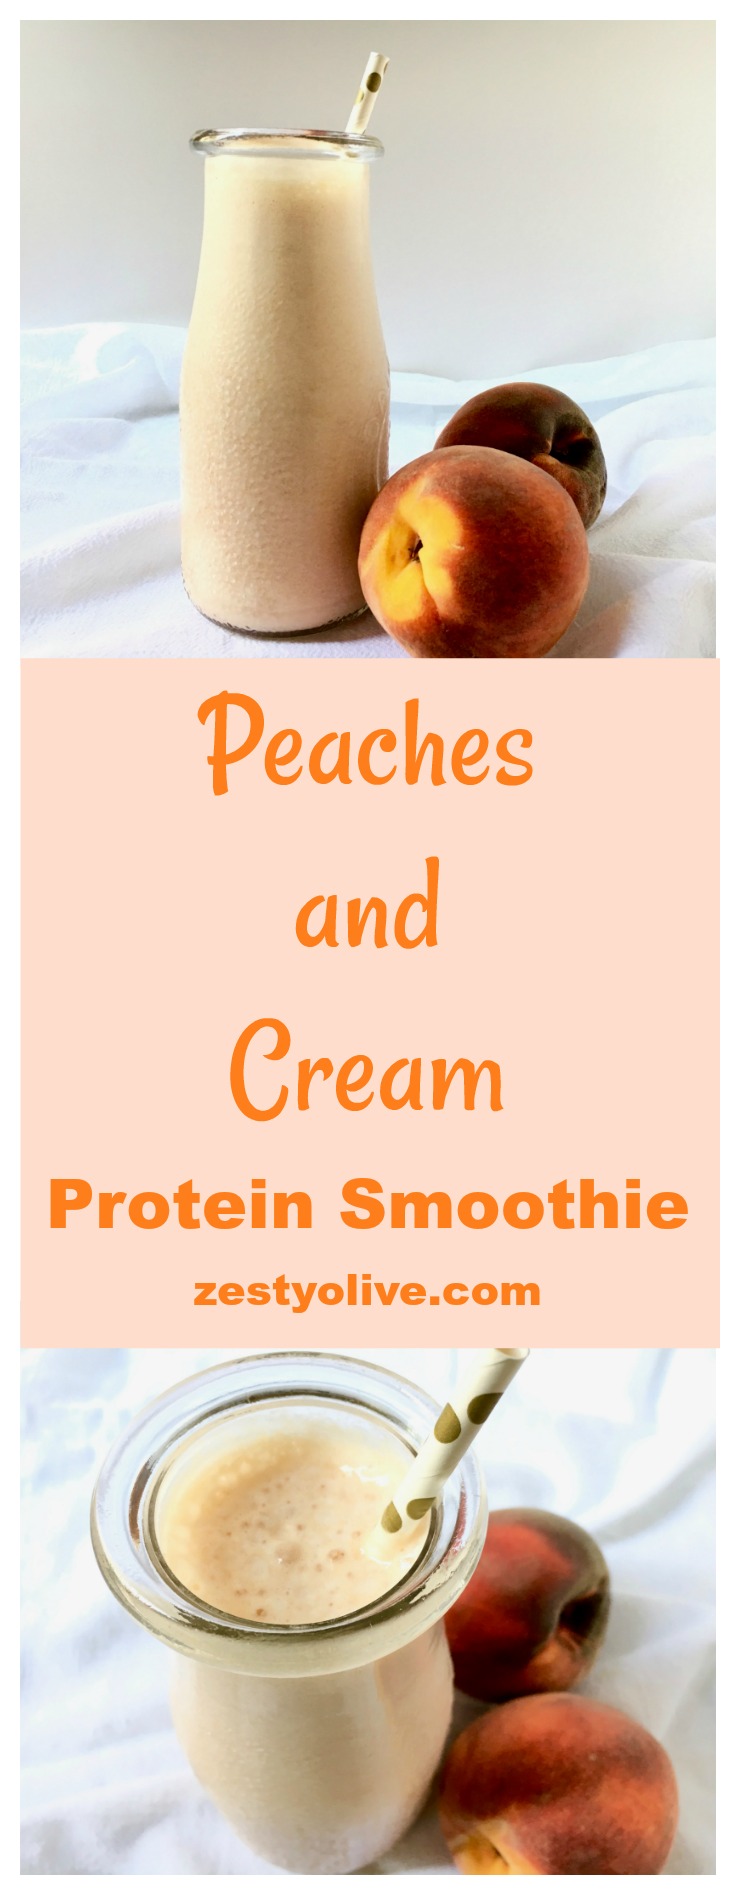 Peaches and Cream Protein Smoothie